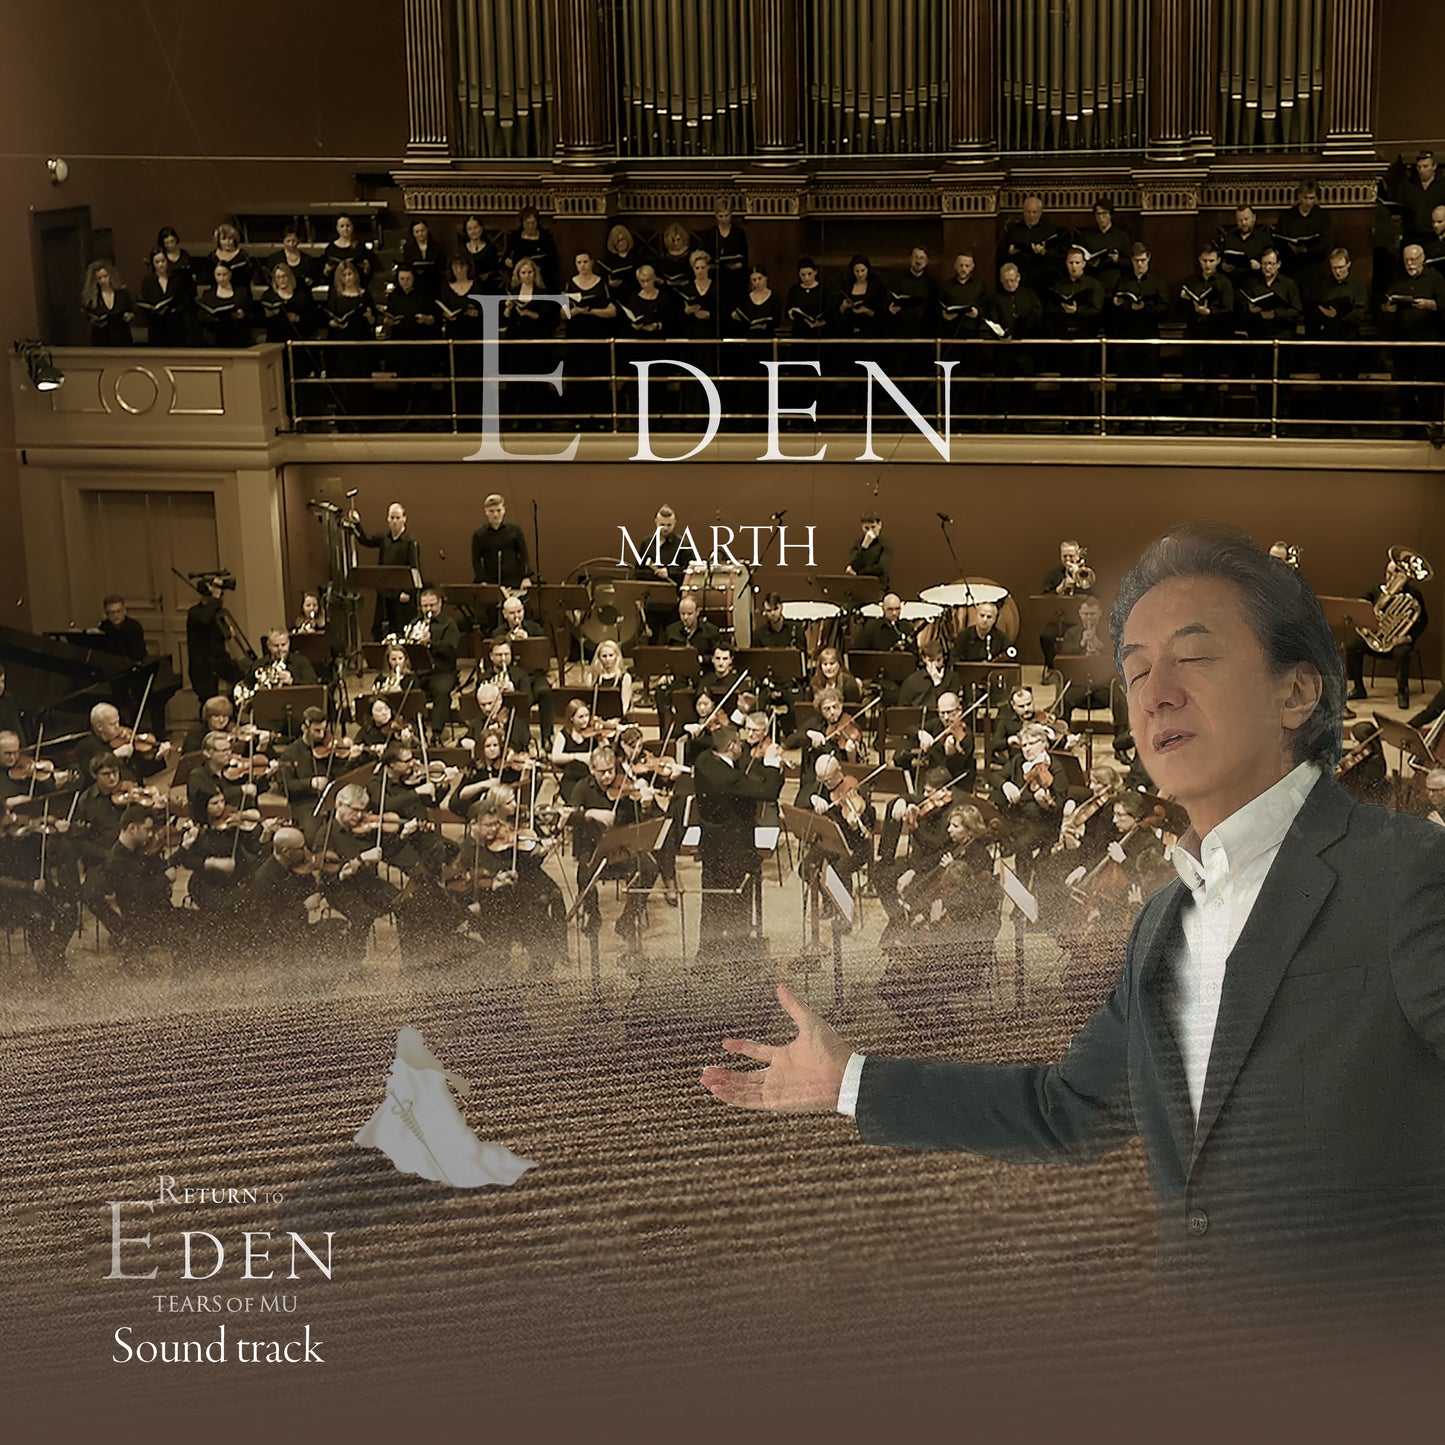 Eden - Orchestra Vocal - MARTH Music Download